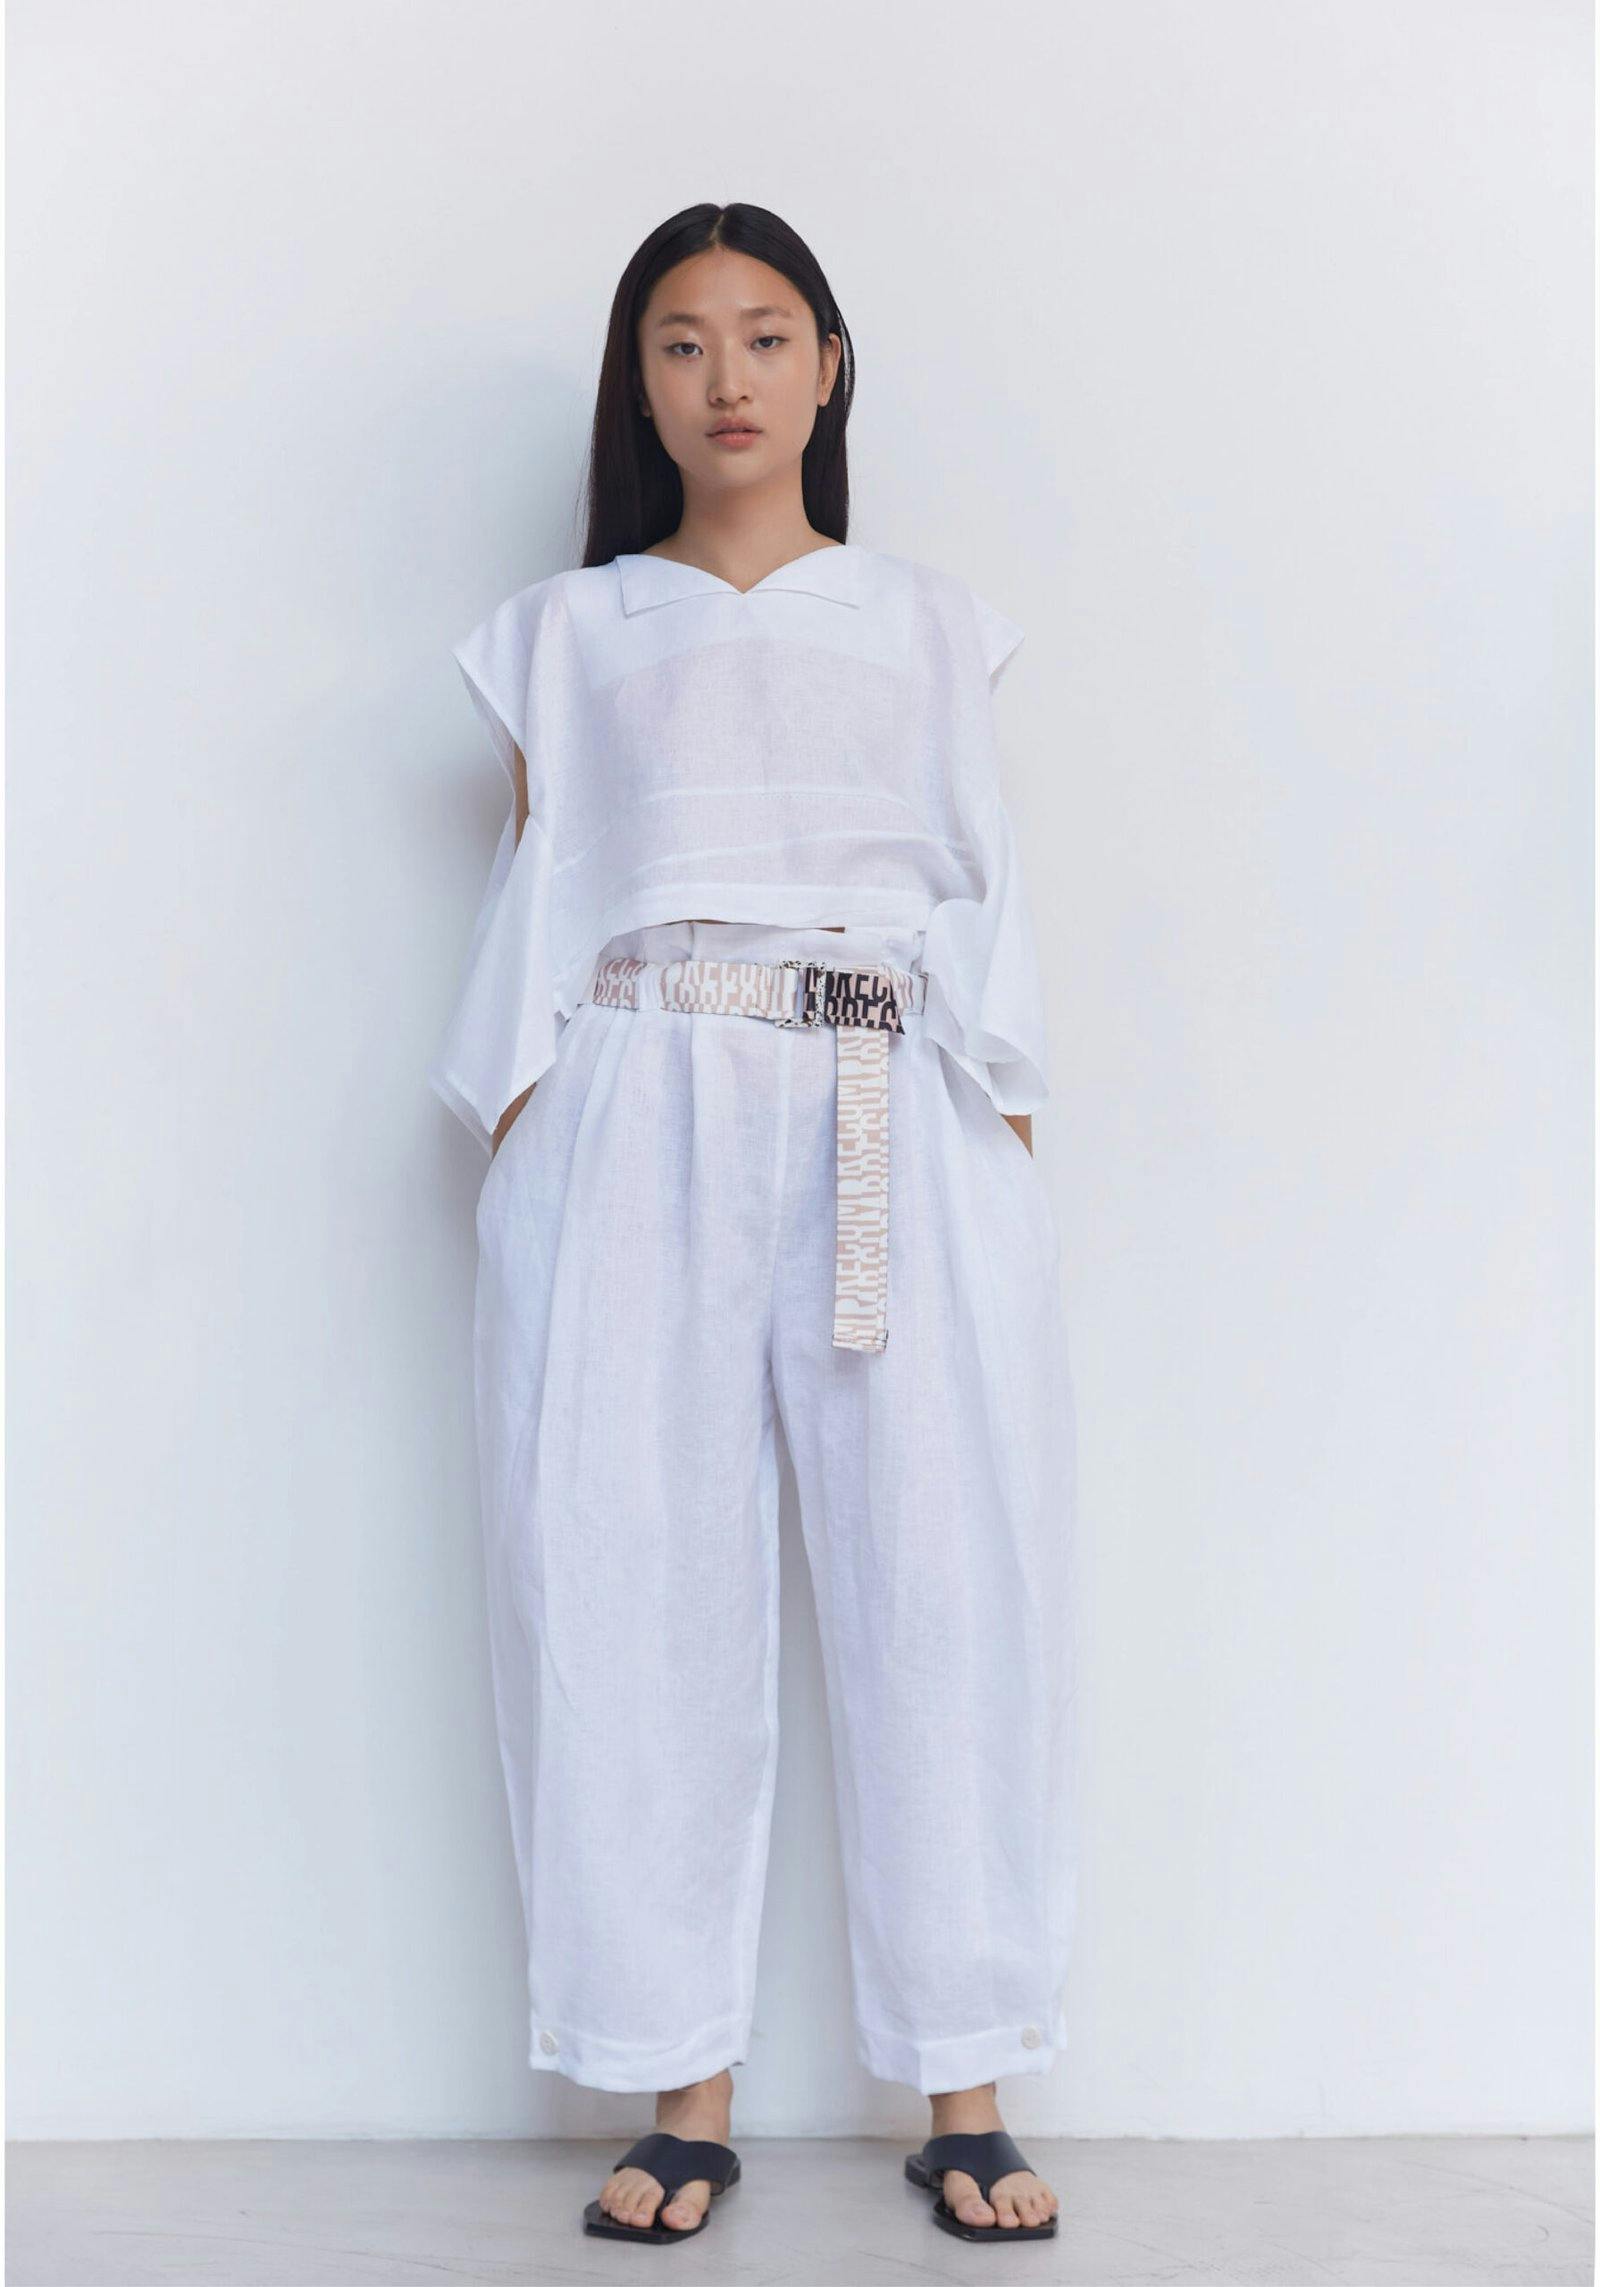 White Pants: Item 005 White, a product by Studio cumbre